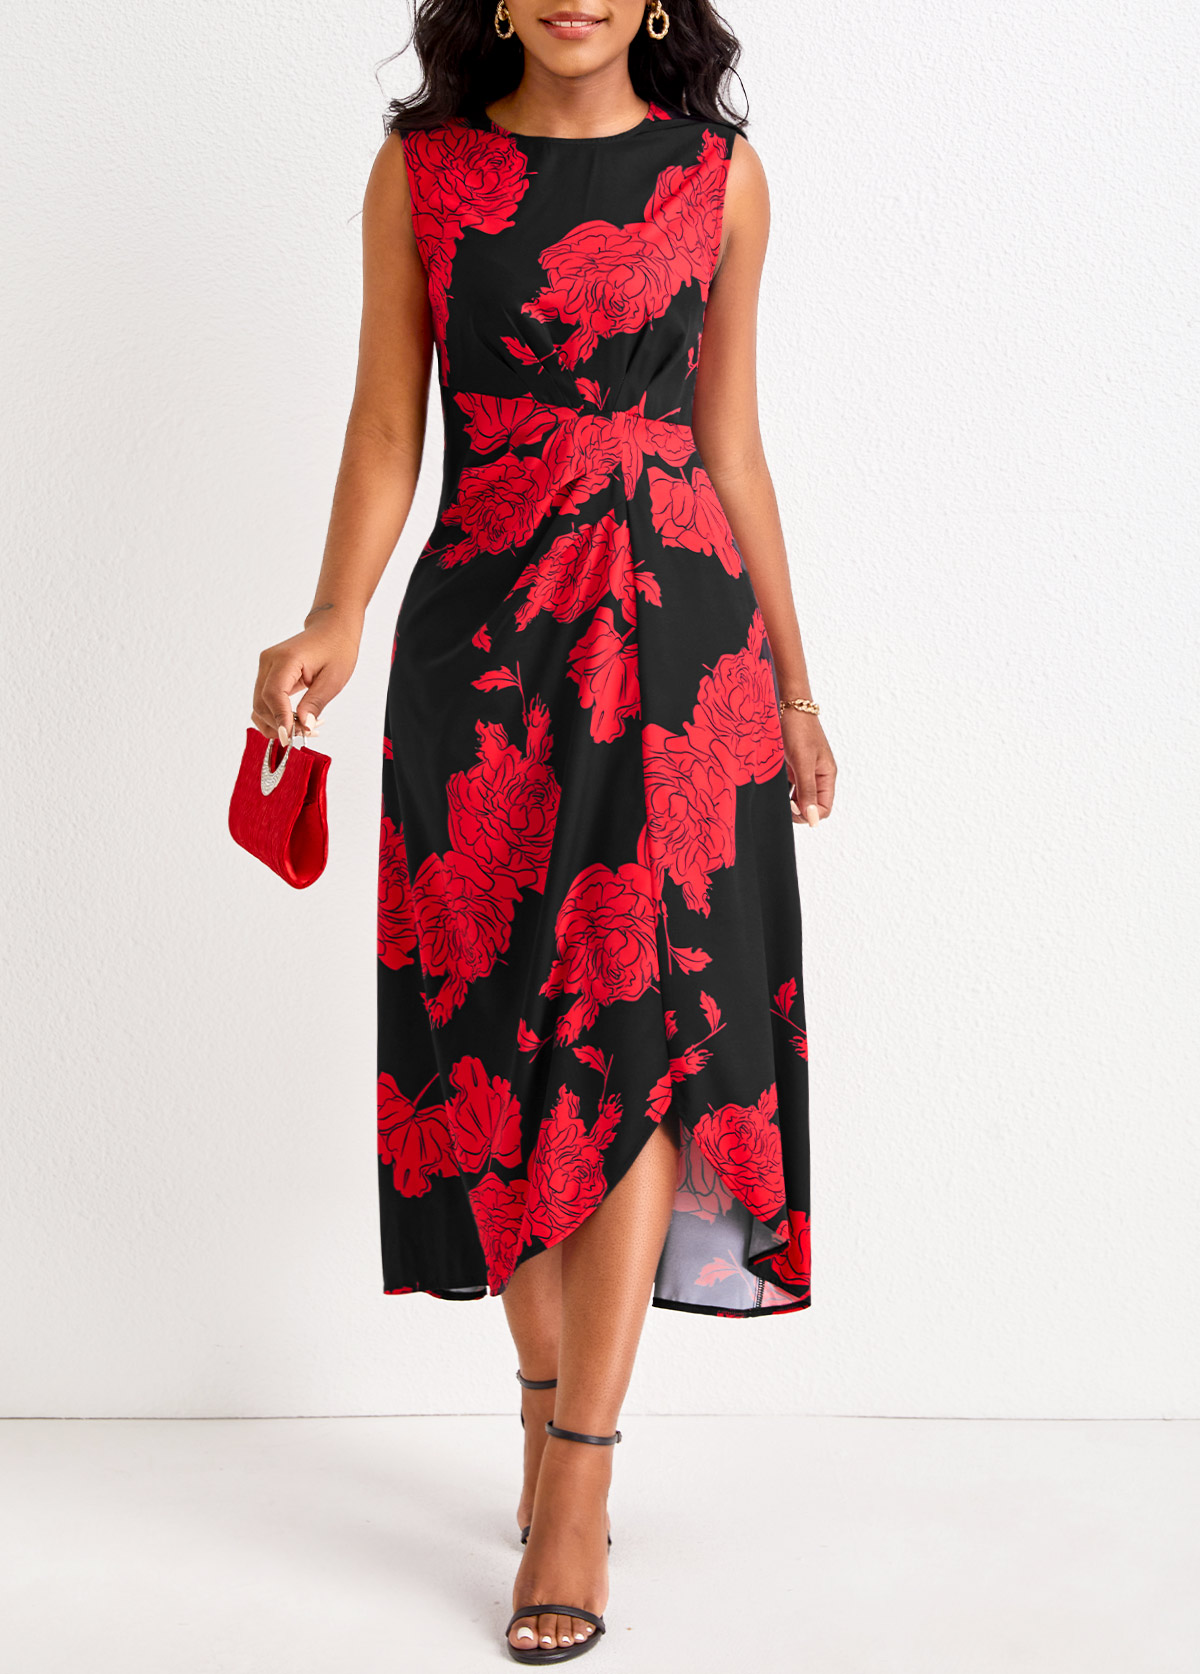 Floral Print Asymmetry Red Round Neck Sleeveless Dress